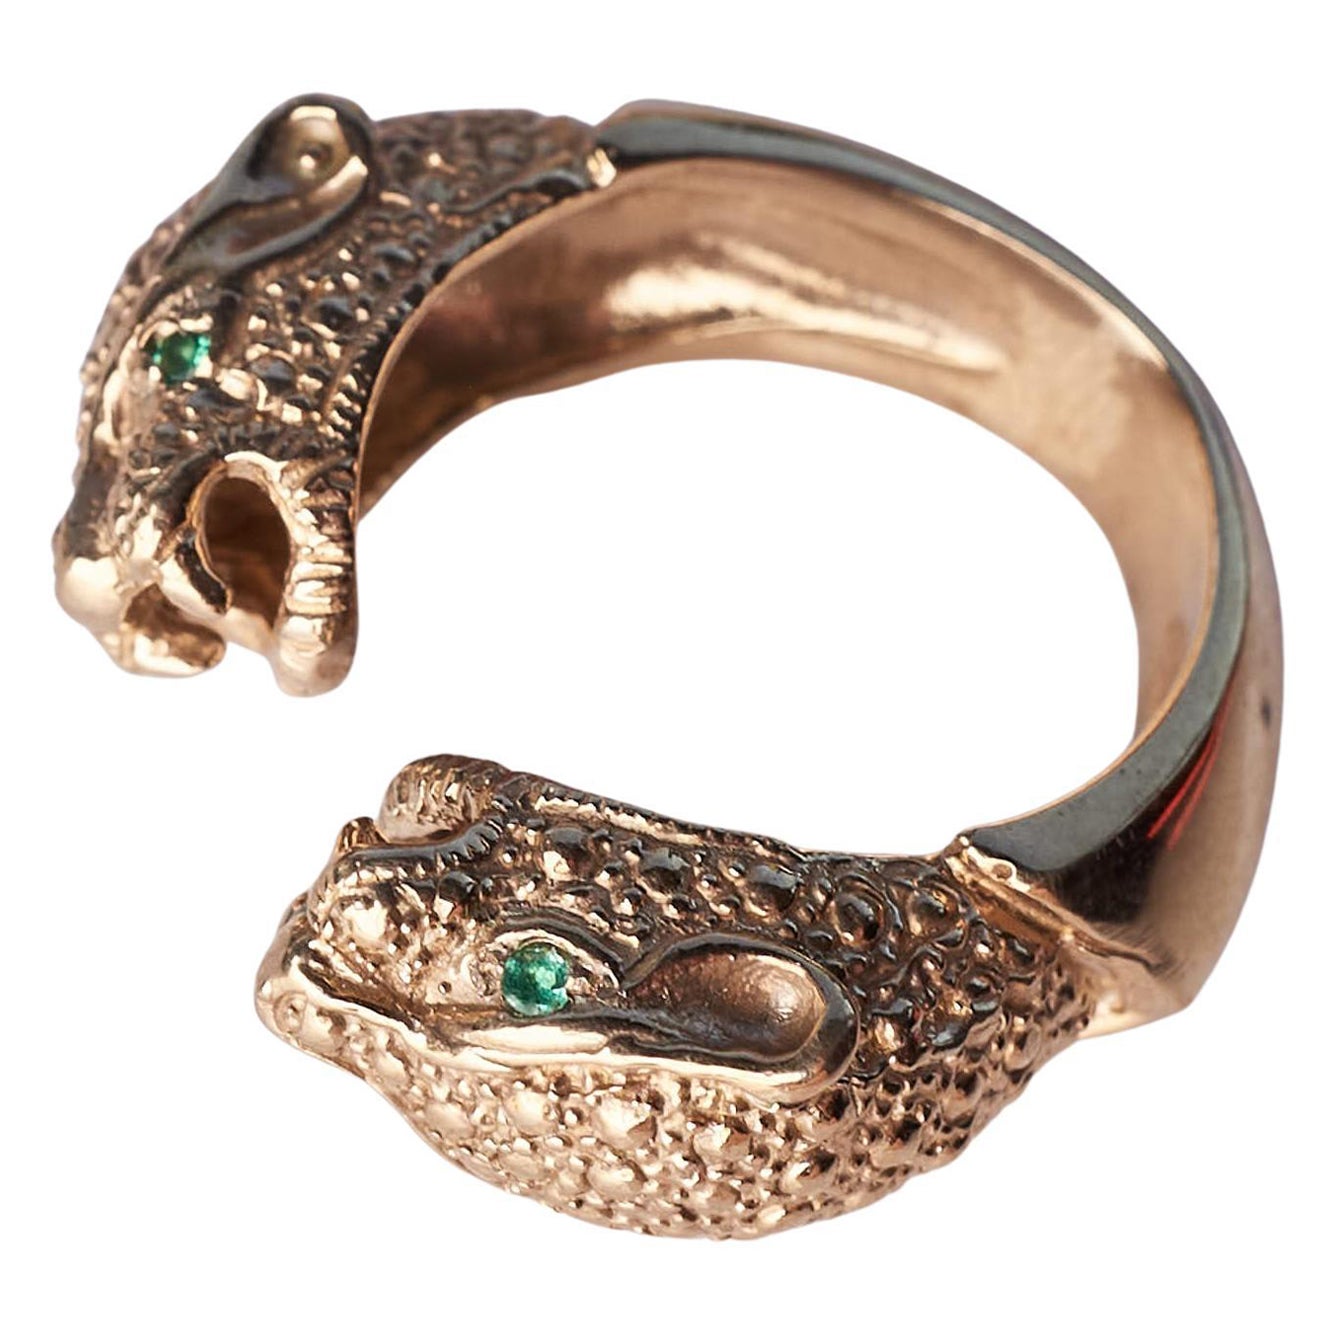 Emerald Jaguar Ring Gold Animal Cocktail Ring Animal Jewelry J Dauphin
J DAUPHIN Ring 